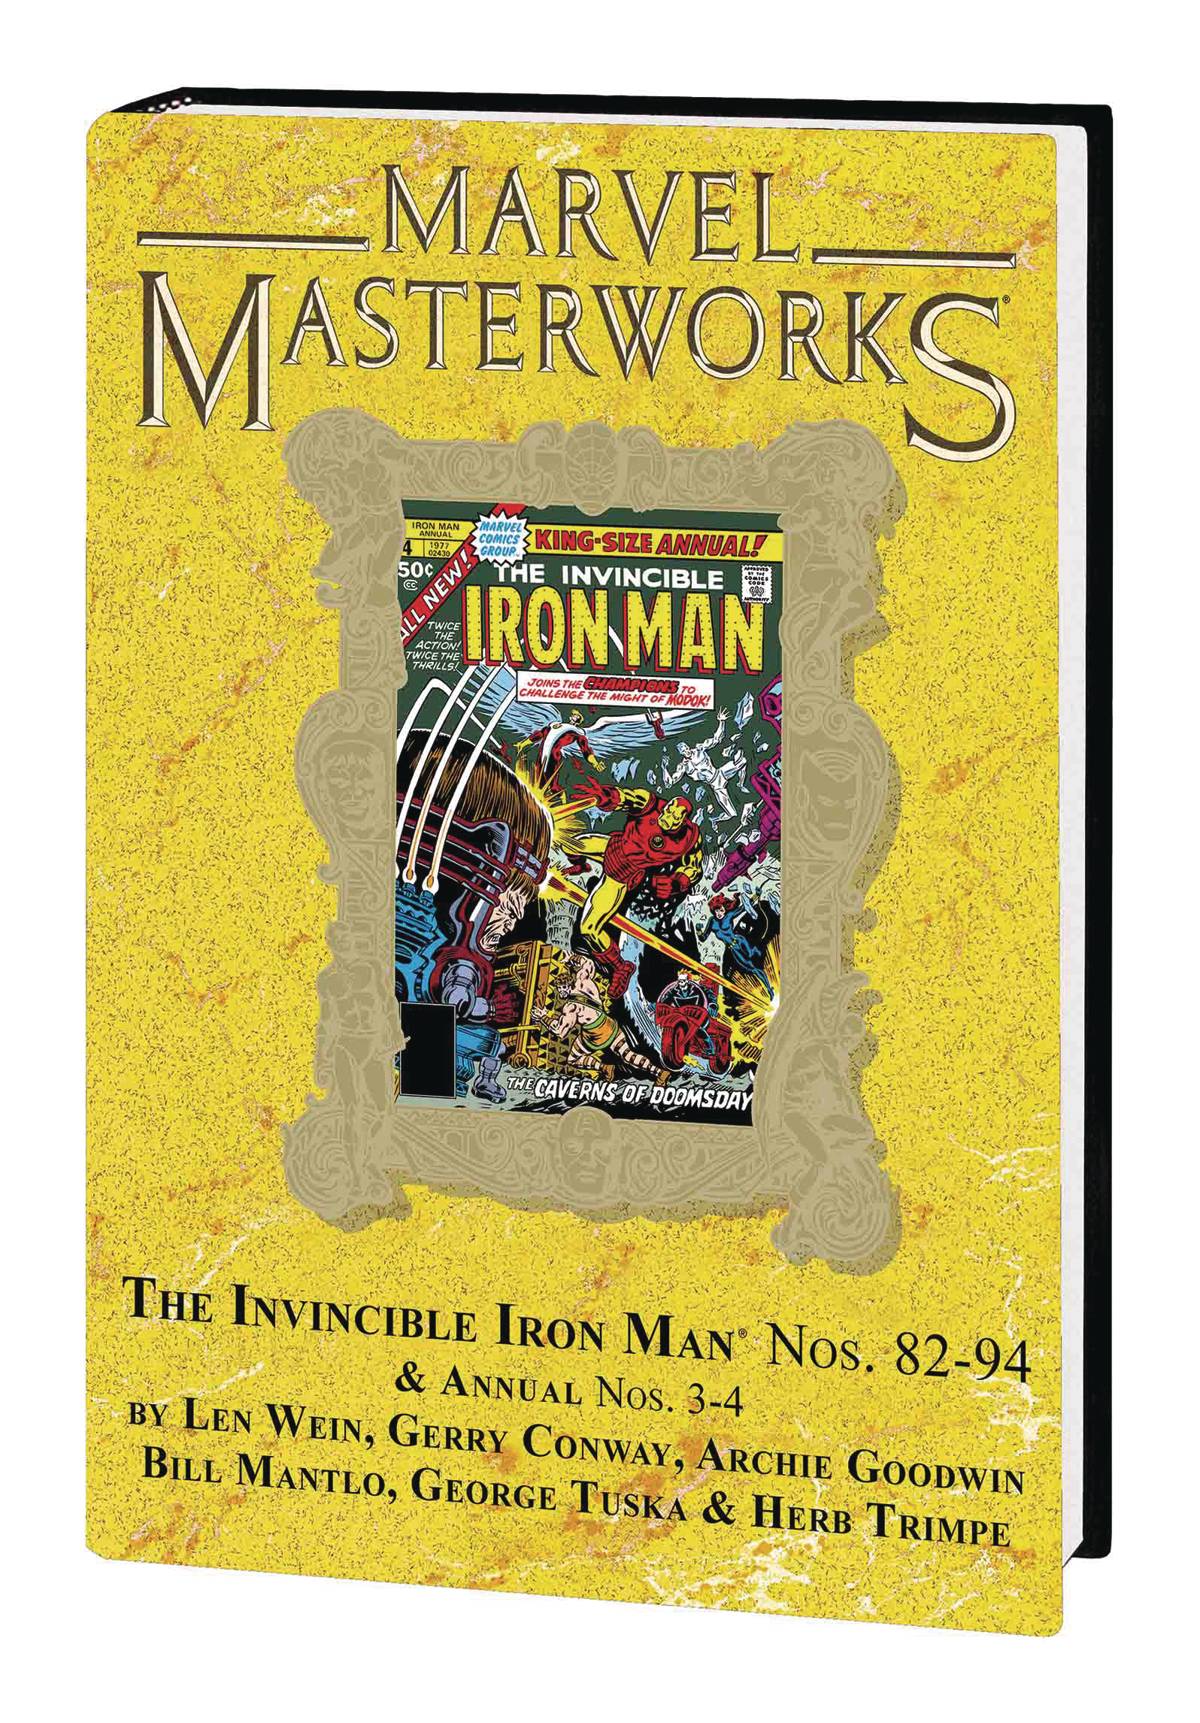 Marvel Masterworks Invincible Iron Man Hardcover Volume 11 Direct Market Variant 266